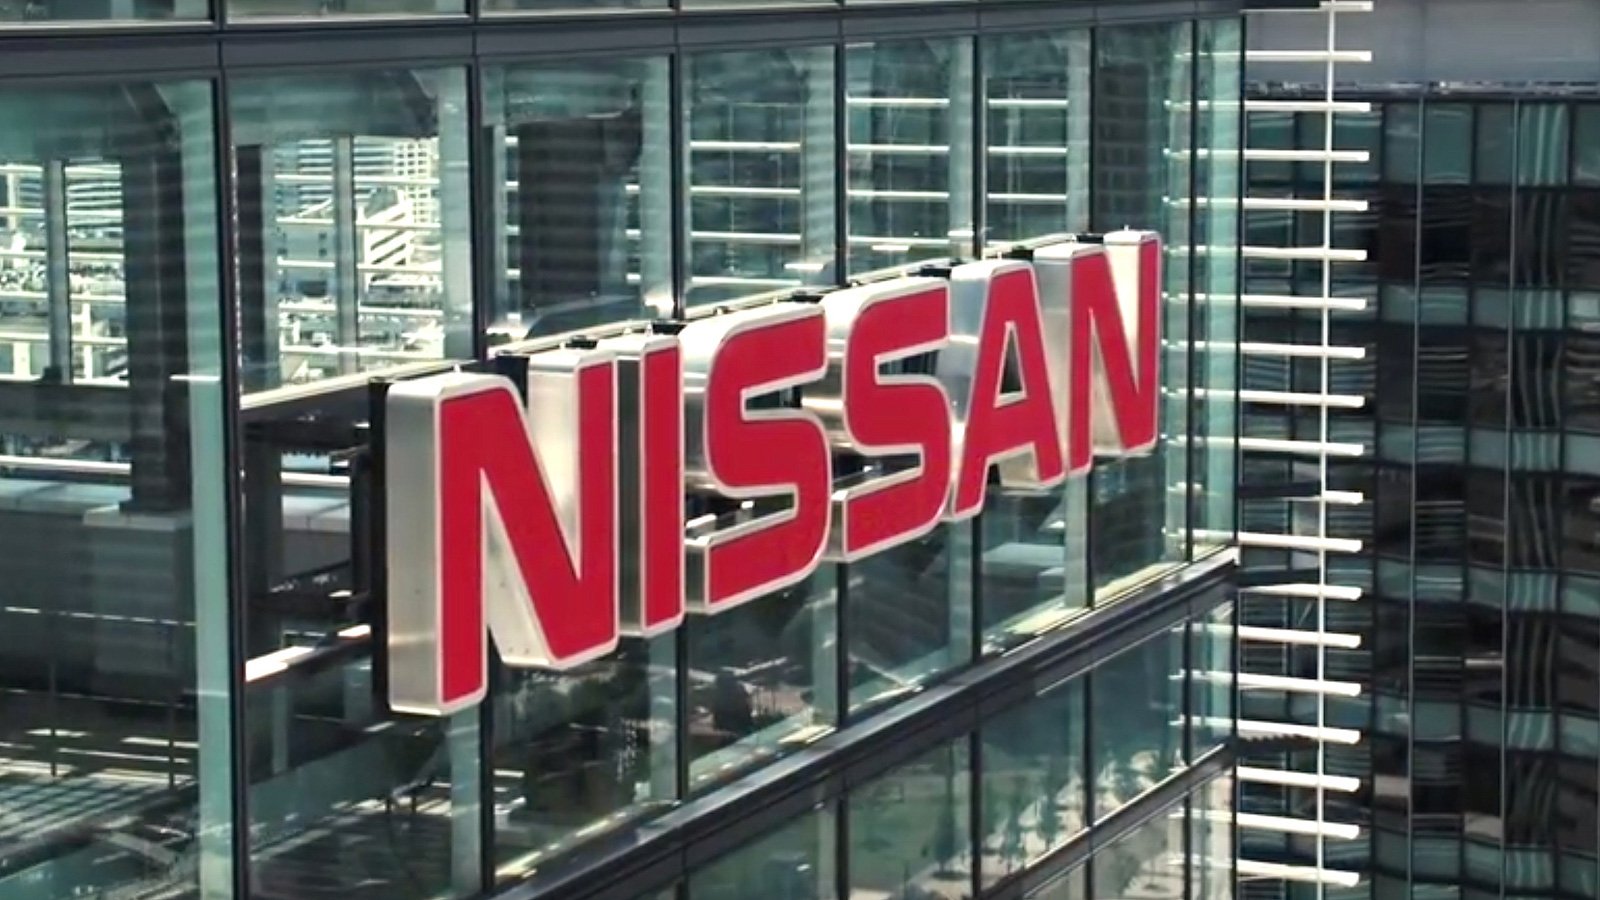 Nissan Australia cyberattack claimed by Akira ransomware gang